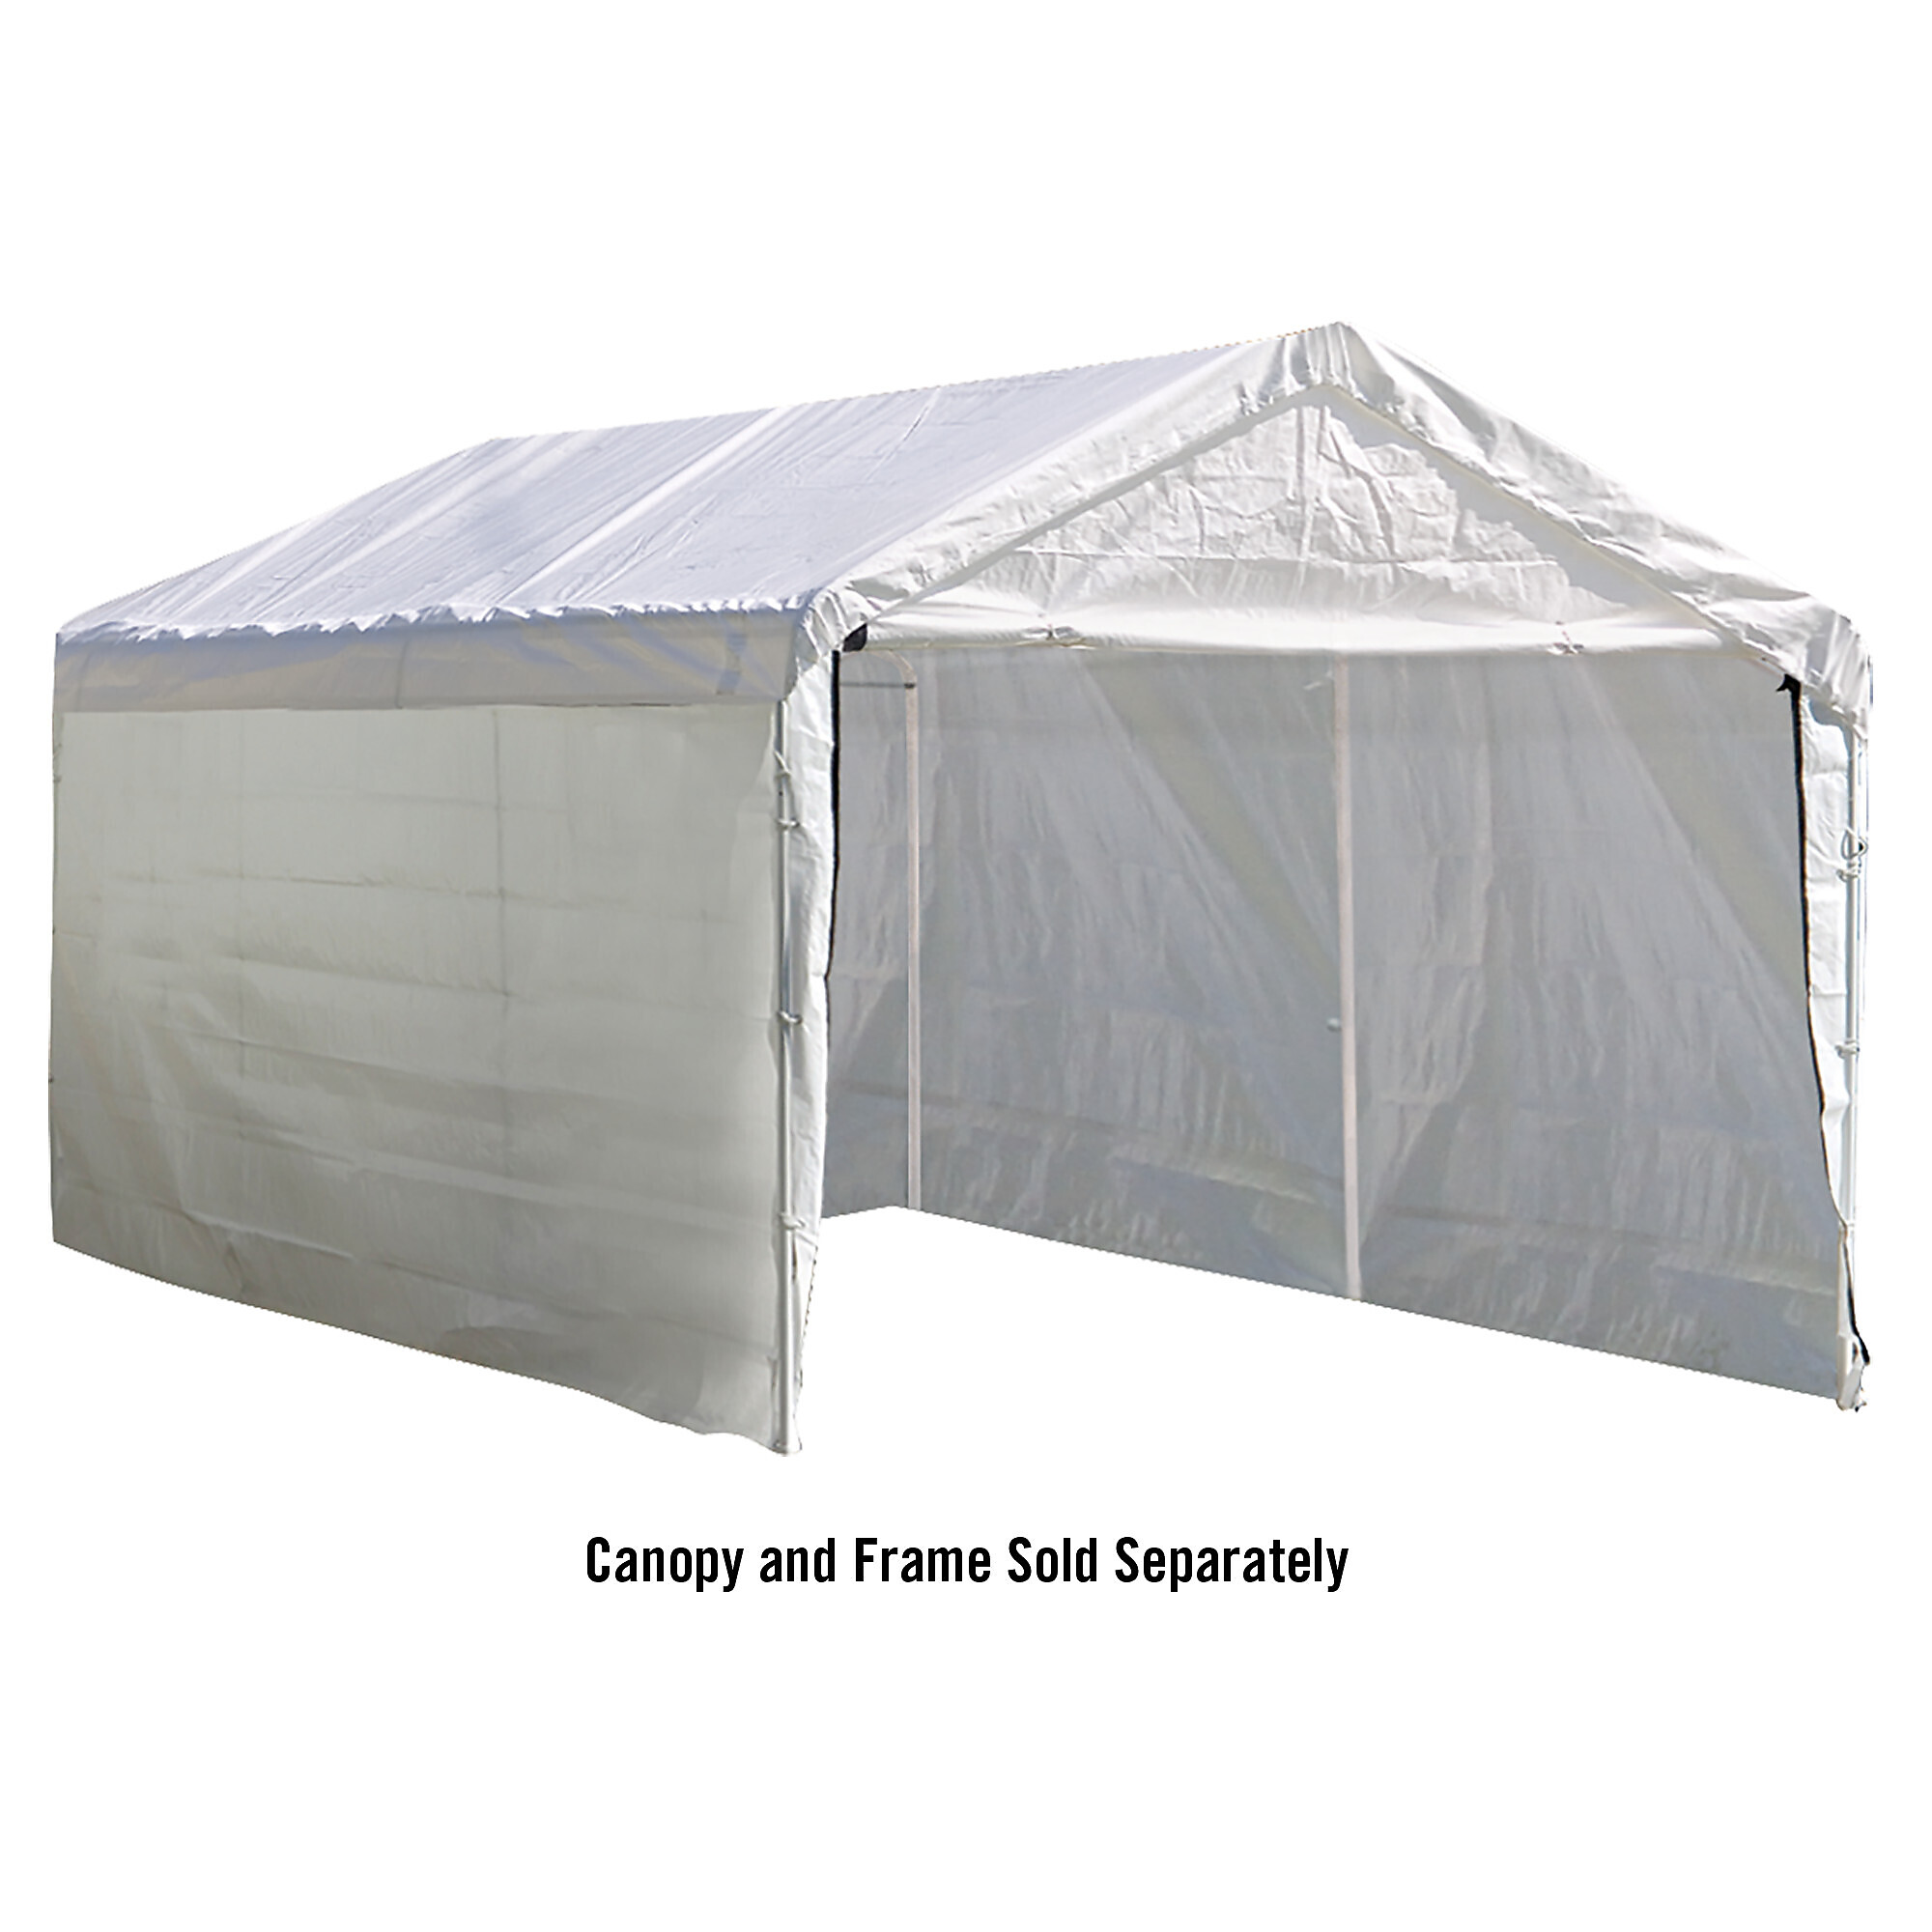 ShelterLogic Enclosure Kit for Super Max 20ft. x 10ft. Outdoor Canopy Tent, Fits Item# 55424, Model 25875